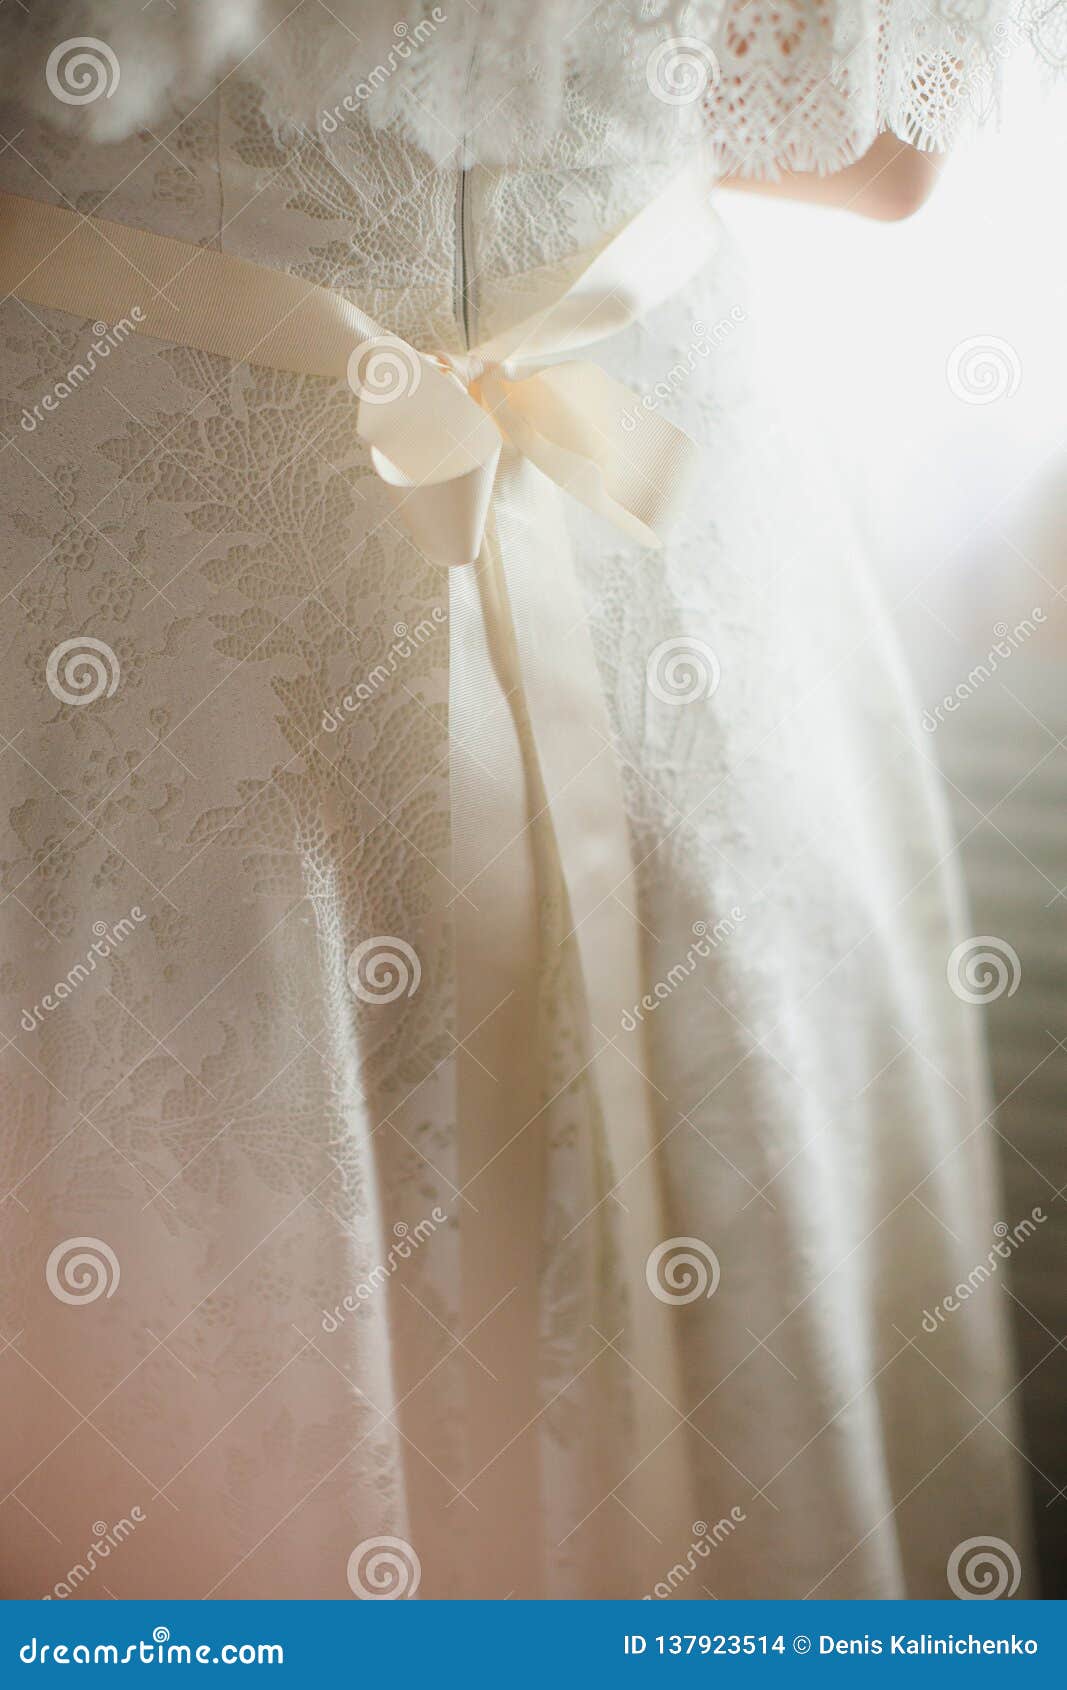 Wedding dress close up stock photo. Image of close, cheerful - 137923514